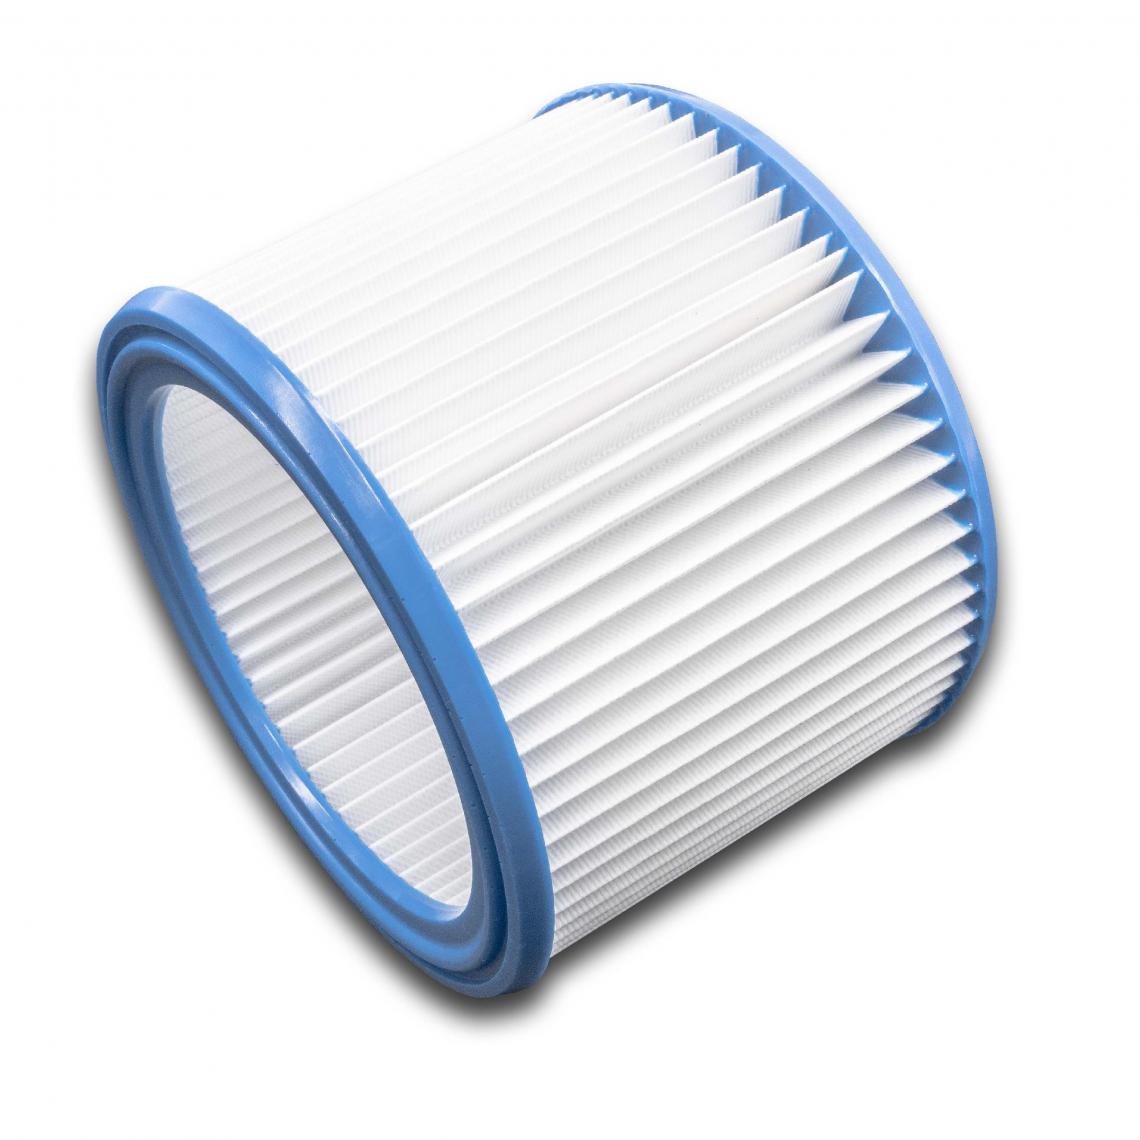 Vhbw - vhbw Set de filtres 5x Filtre plissé compatible avec Nilfisk Aero 21 / 21 INOX, 26, 31 INOX aspirateur à sec ou humide - Filtre à cartouche - Accessoire entretien des sols